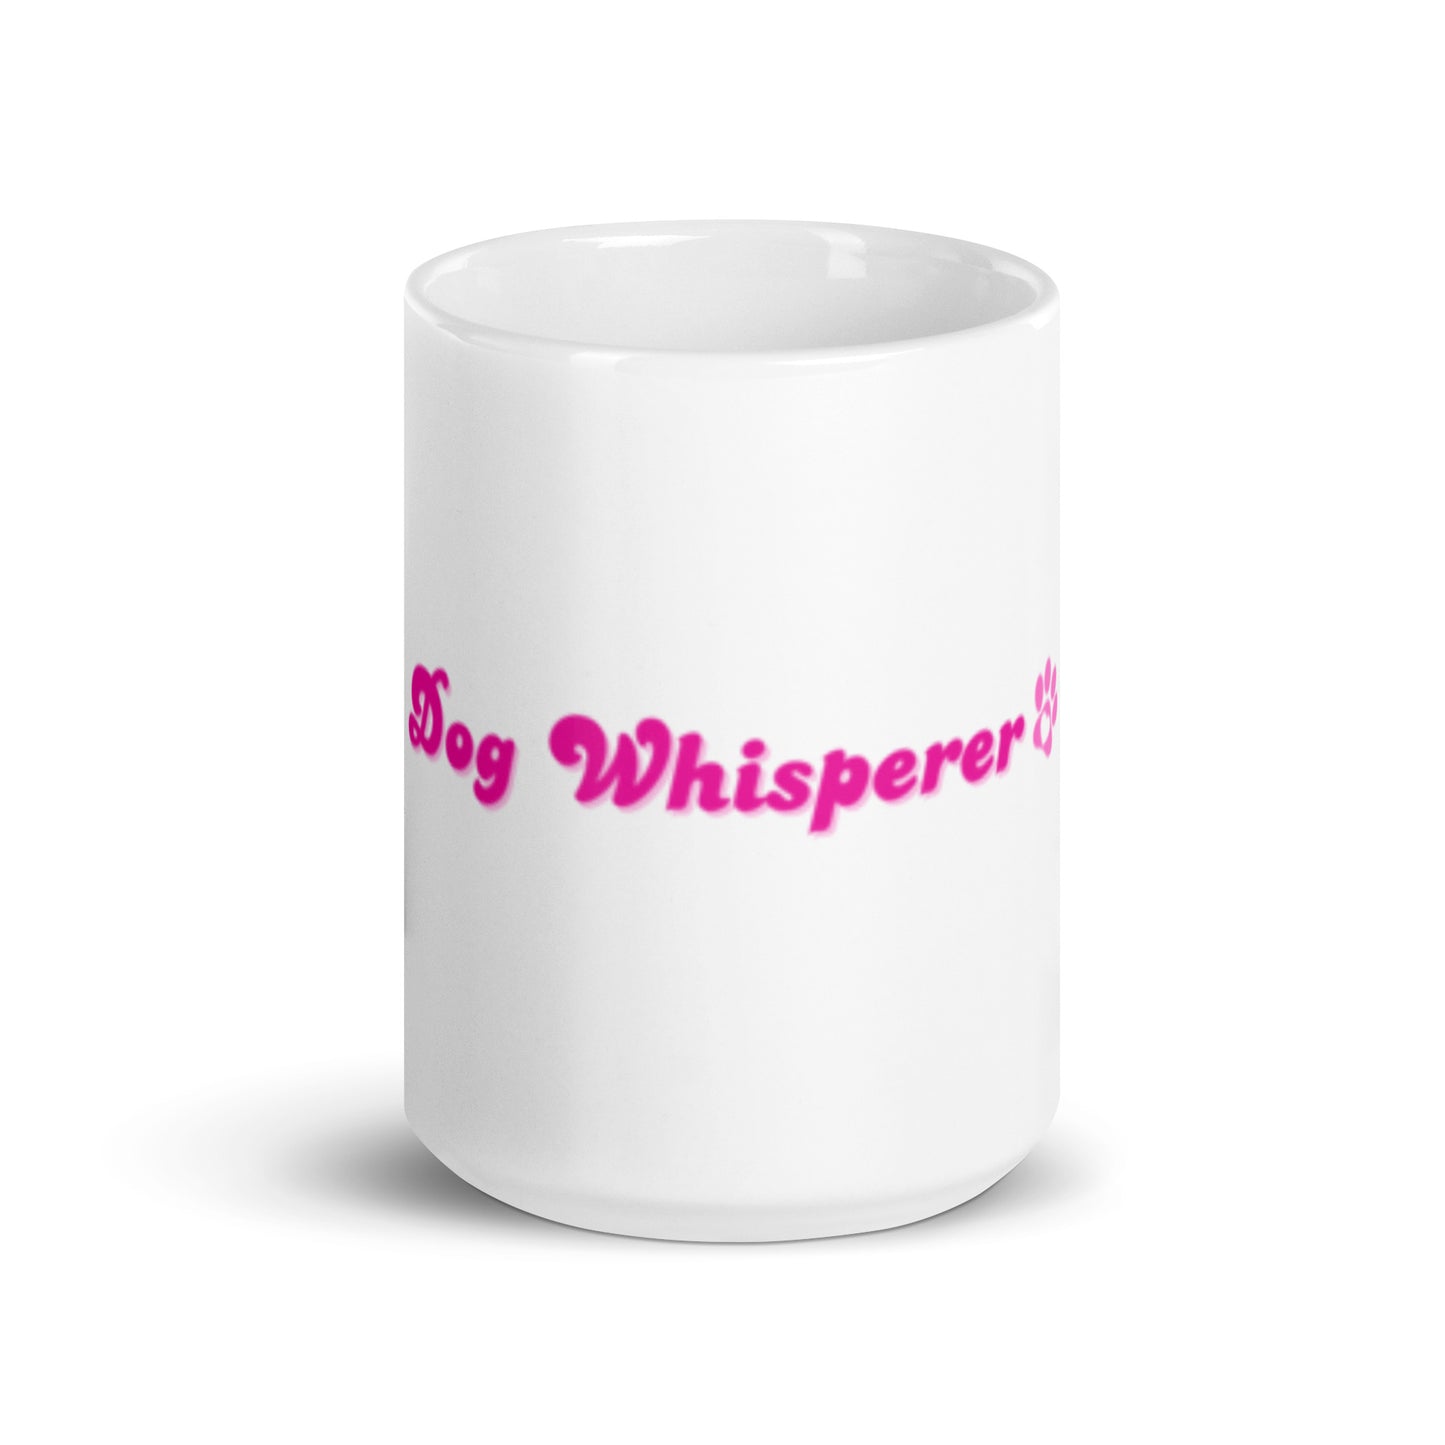 Dog Whisperer White glossy mug